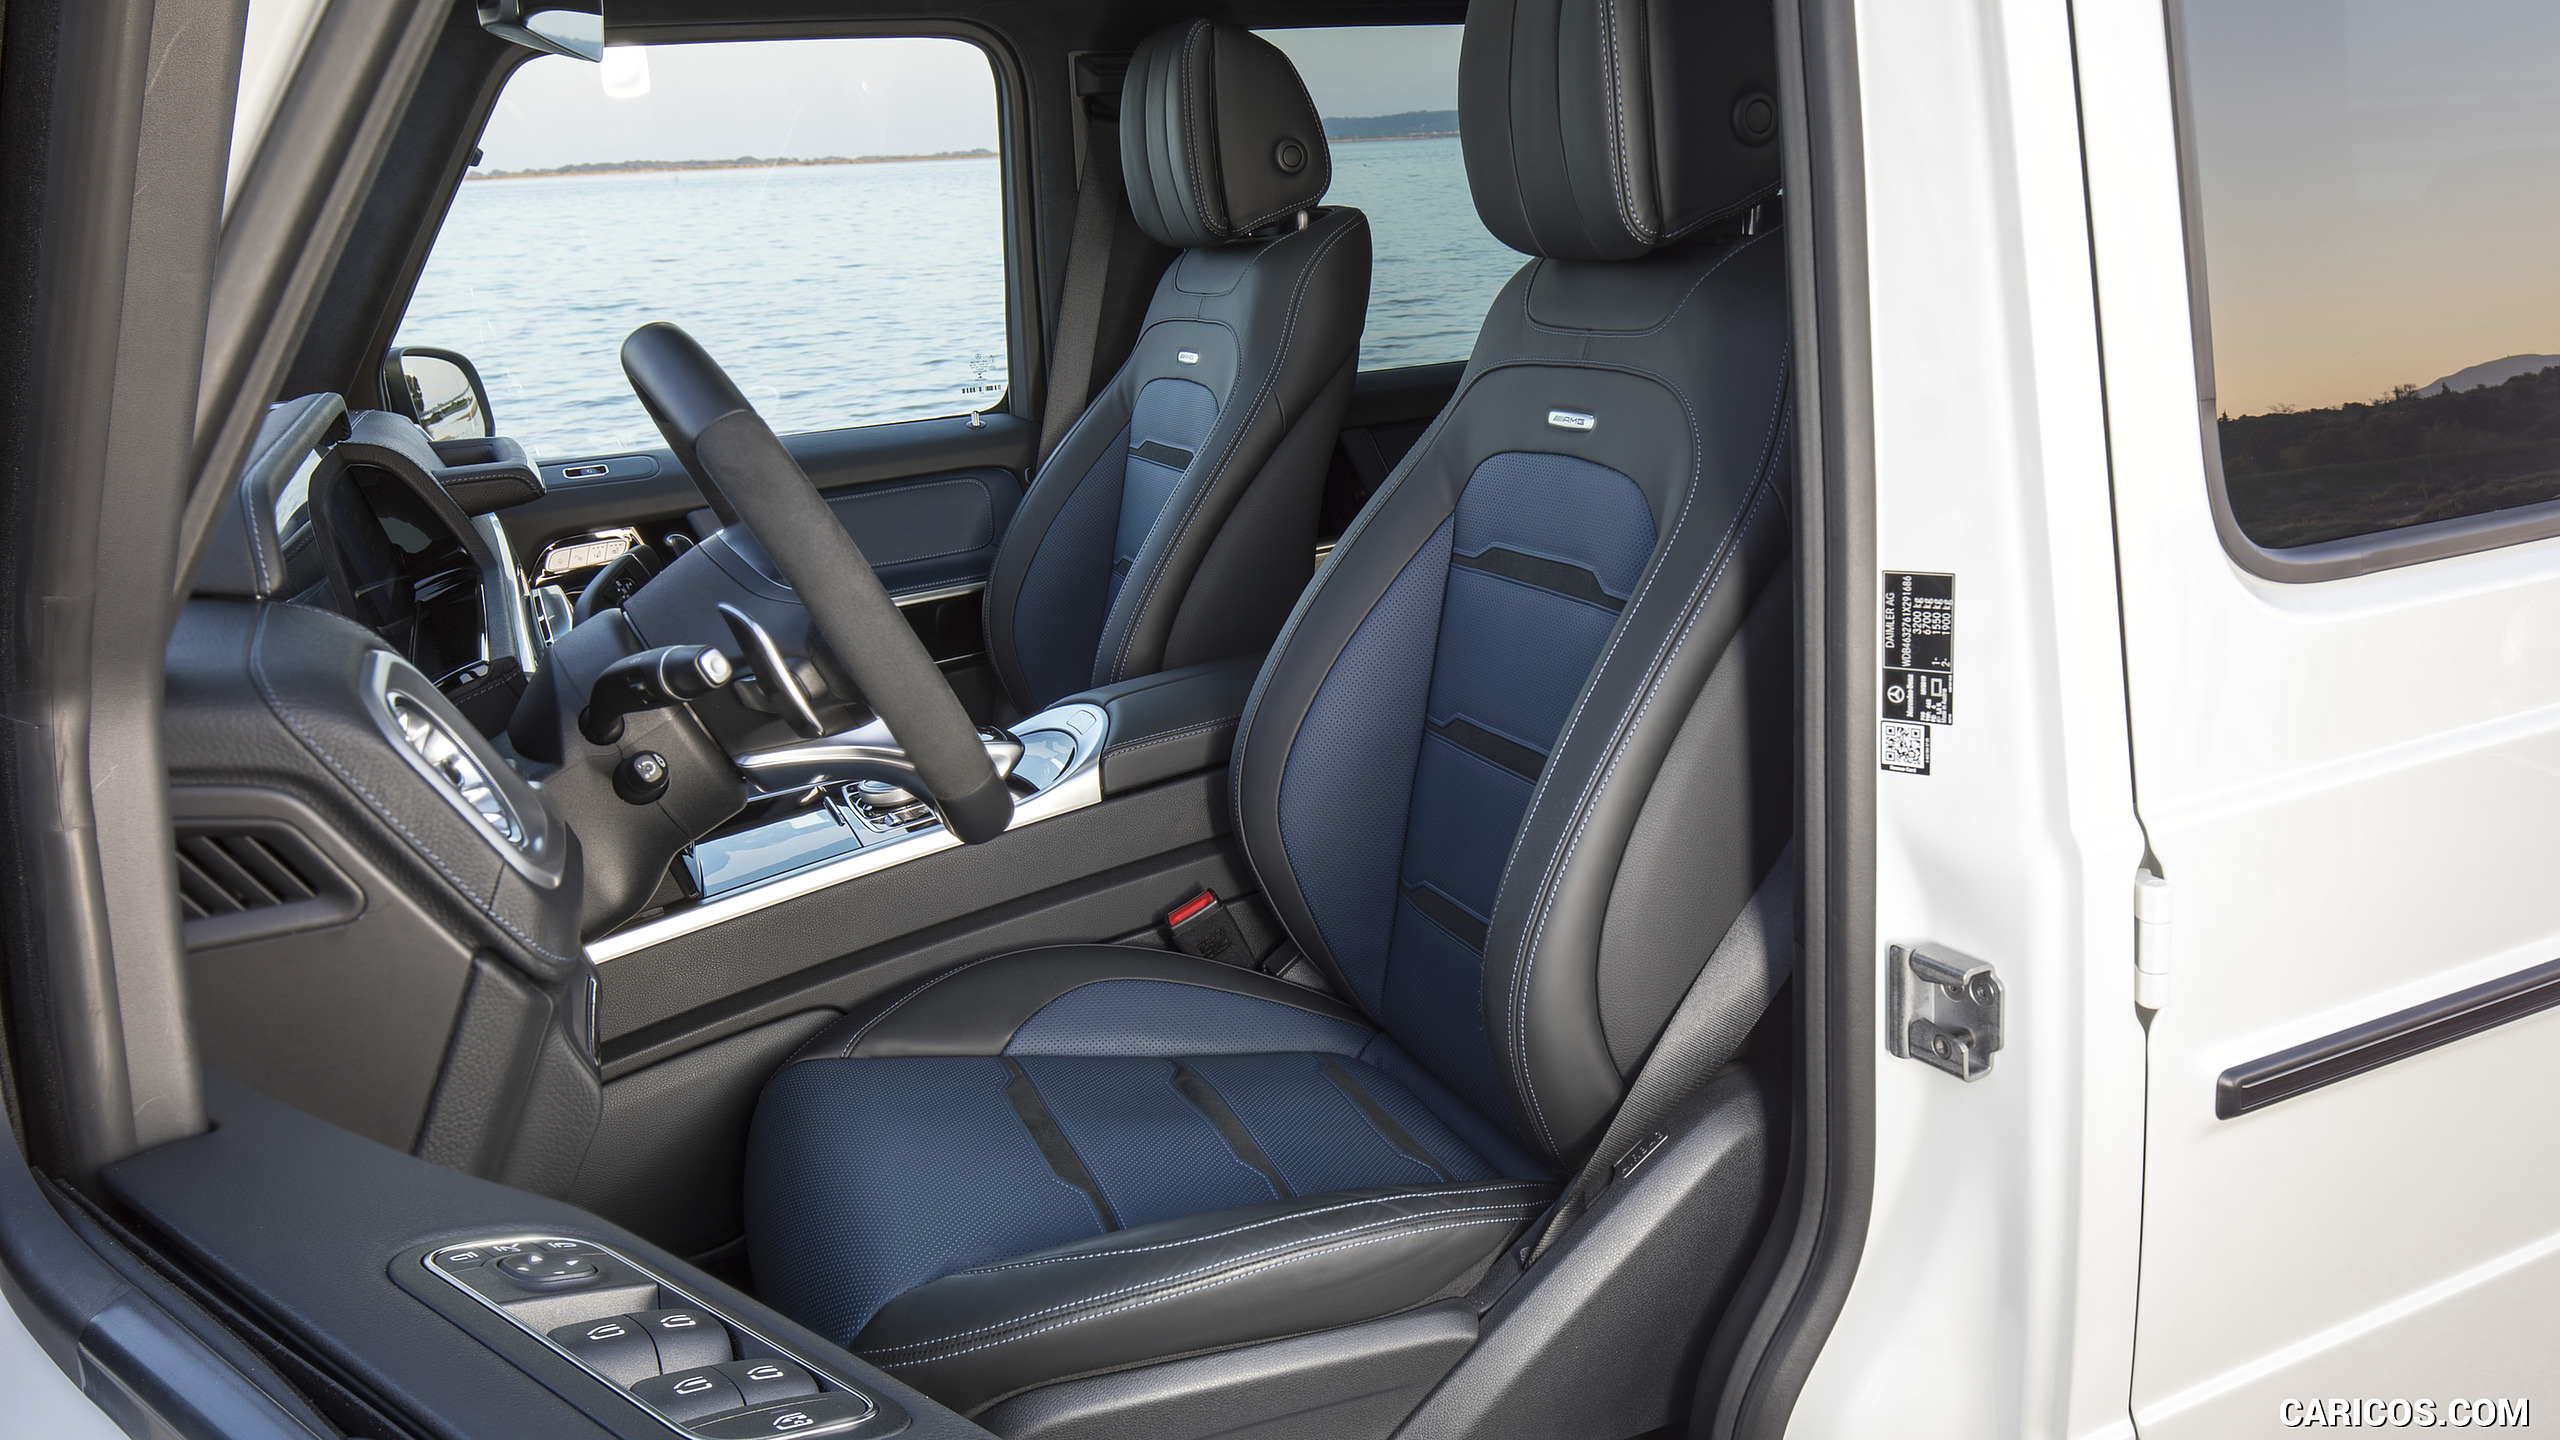 2019 Mercedes-AMG G63 - Interior, Rear Seats, #120 of 452